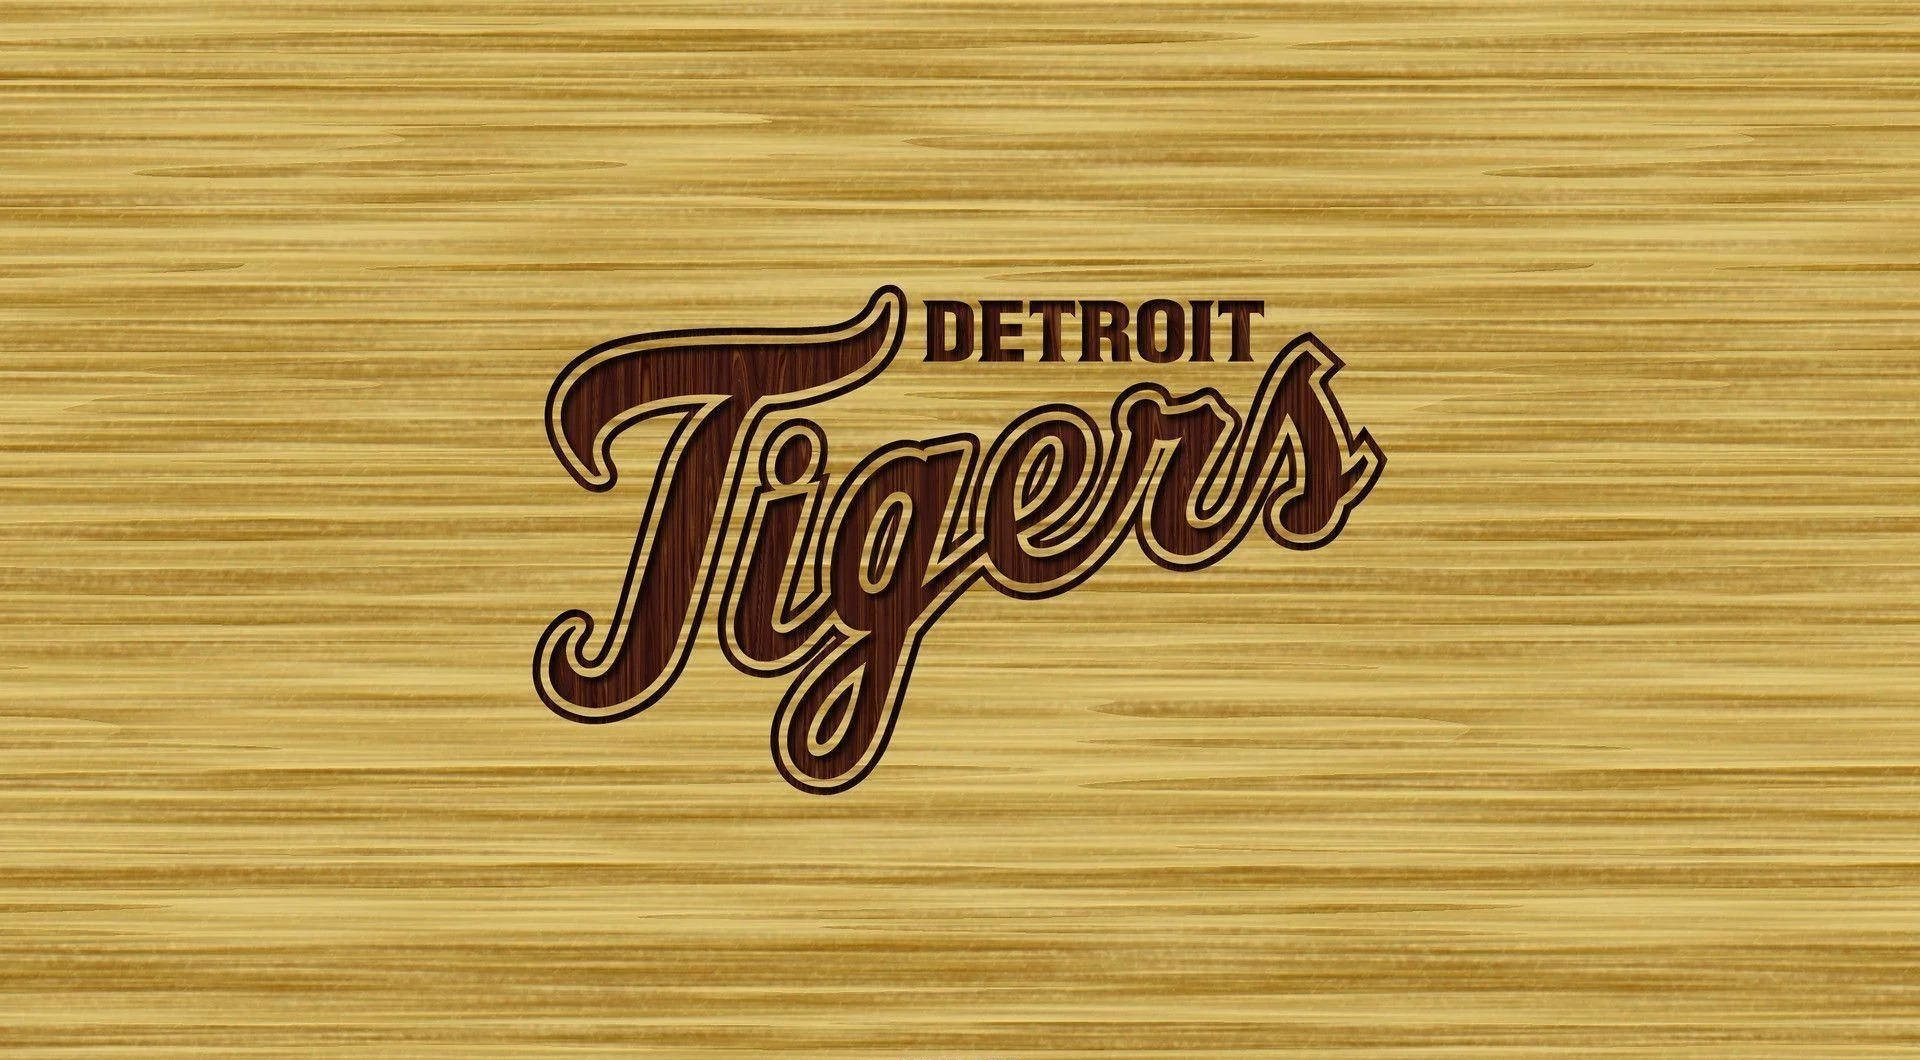 Detroit Tigers Wooden Logo Wallpaper